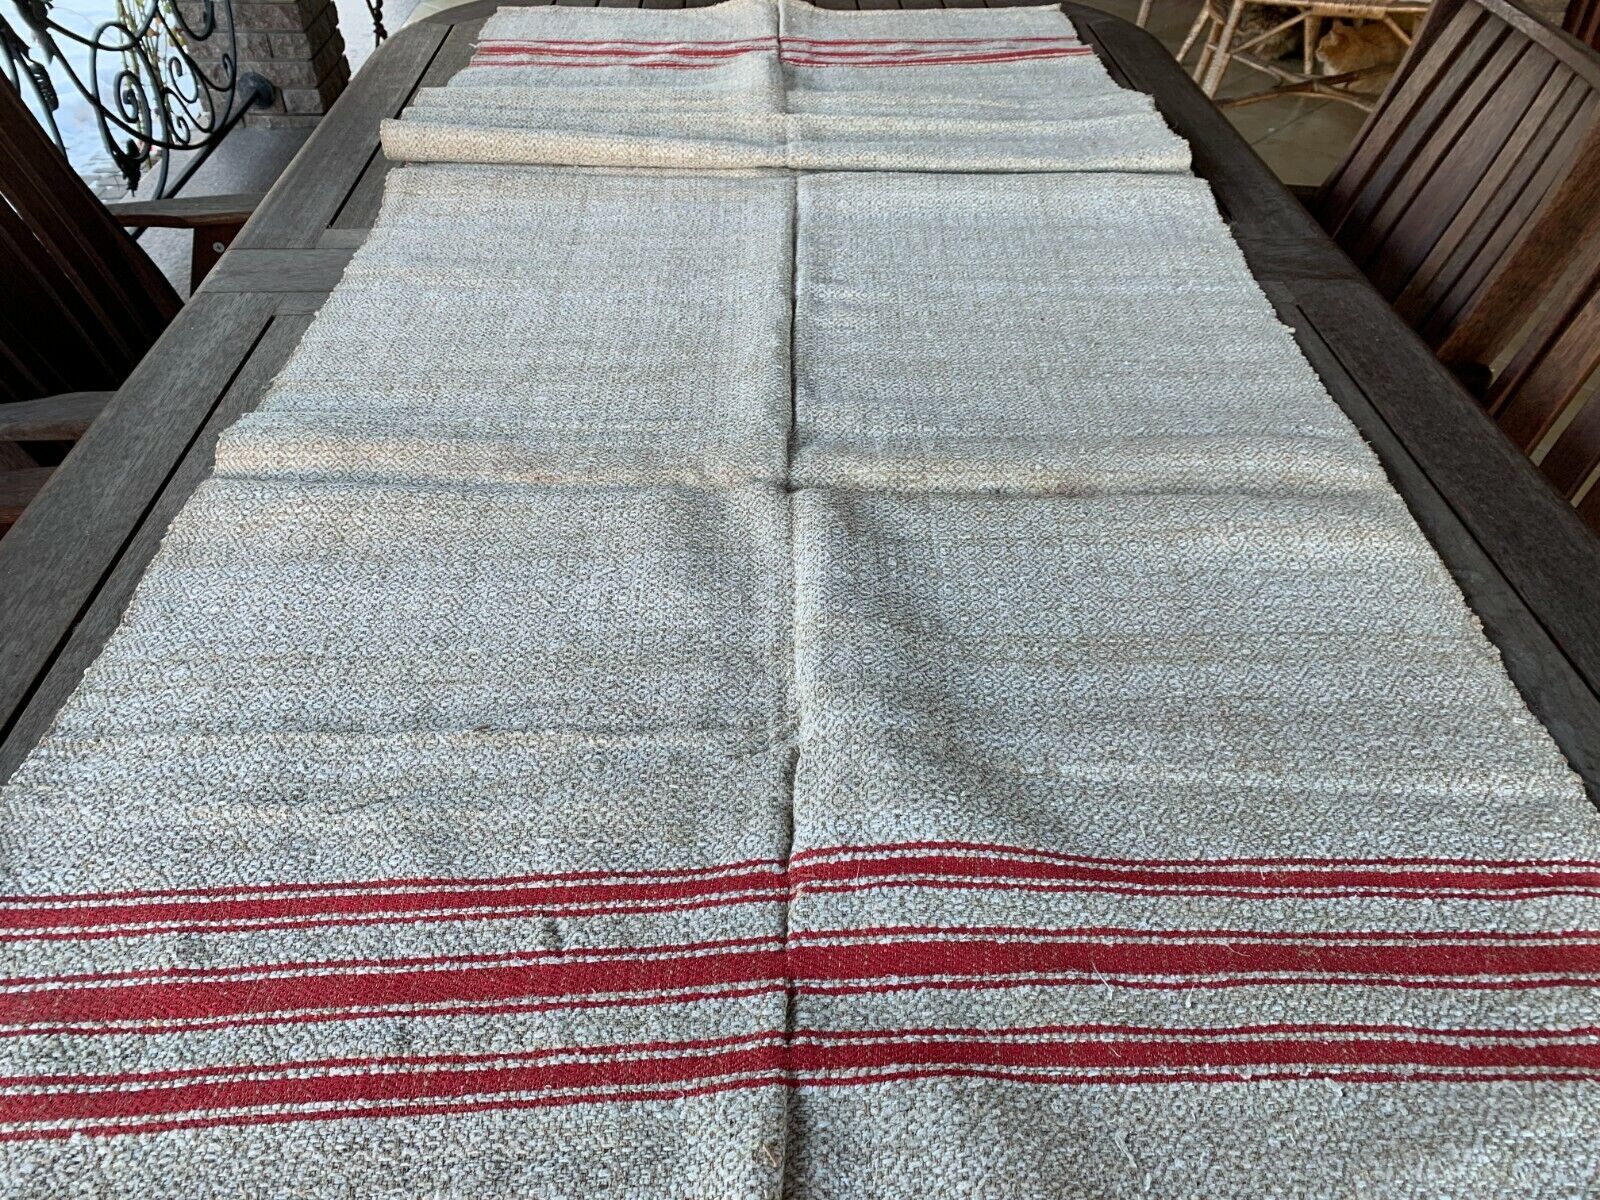 Old Hand Woven Fabric Homespun Hemp Linen Textile Rustic Primitive Antique Decor